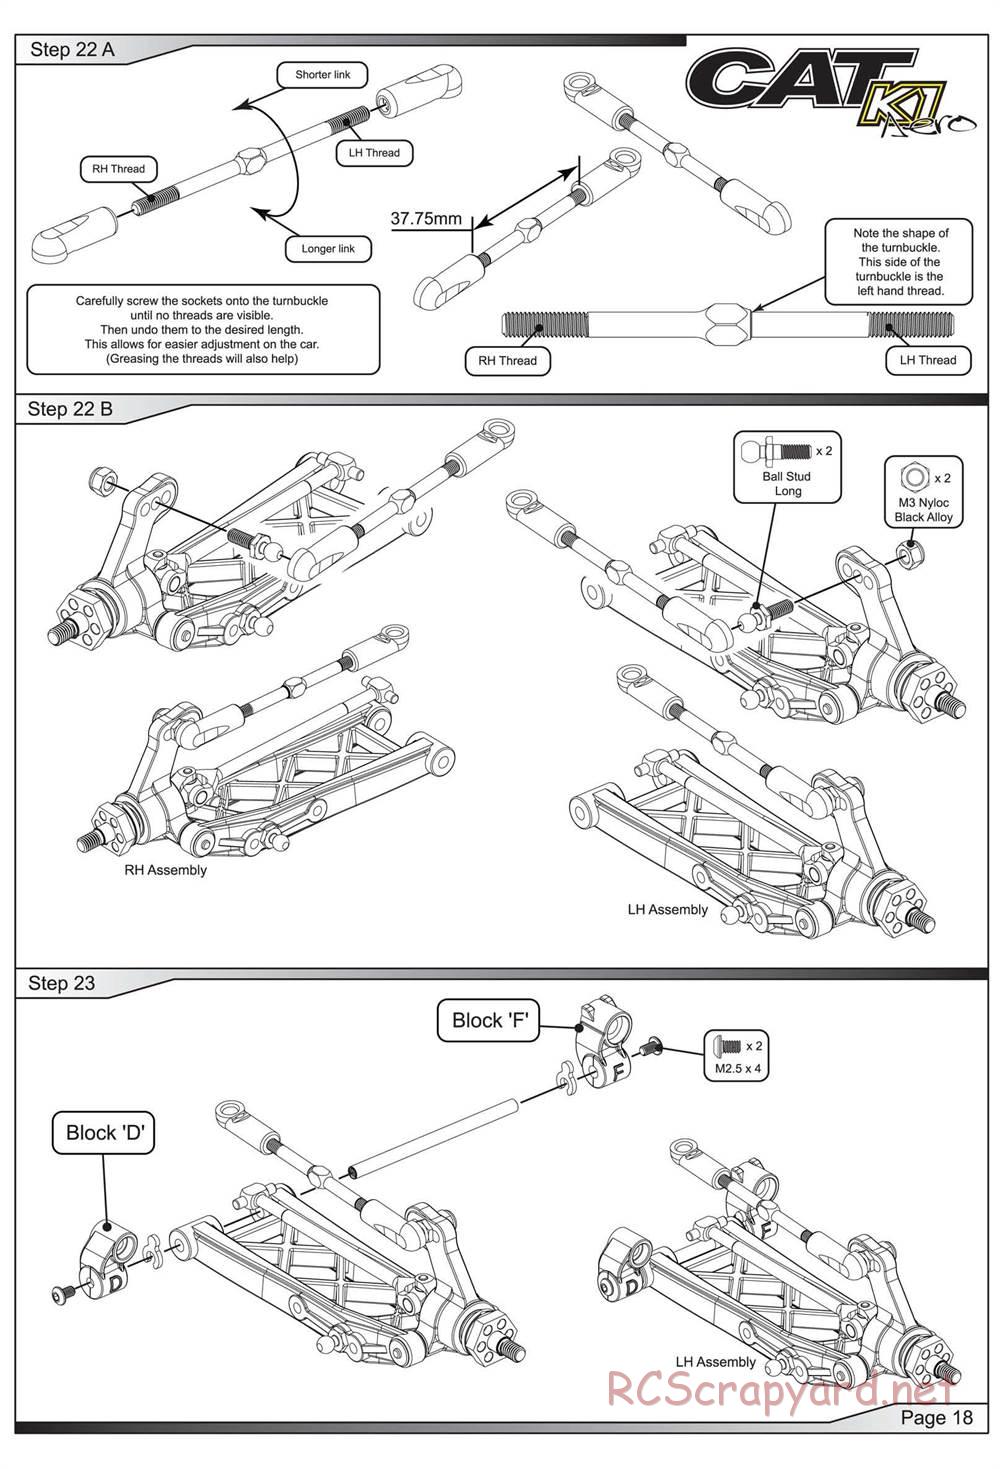 Schumacher - Cat K1 Aero - Manual - Page 19